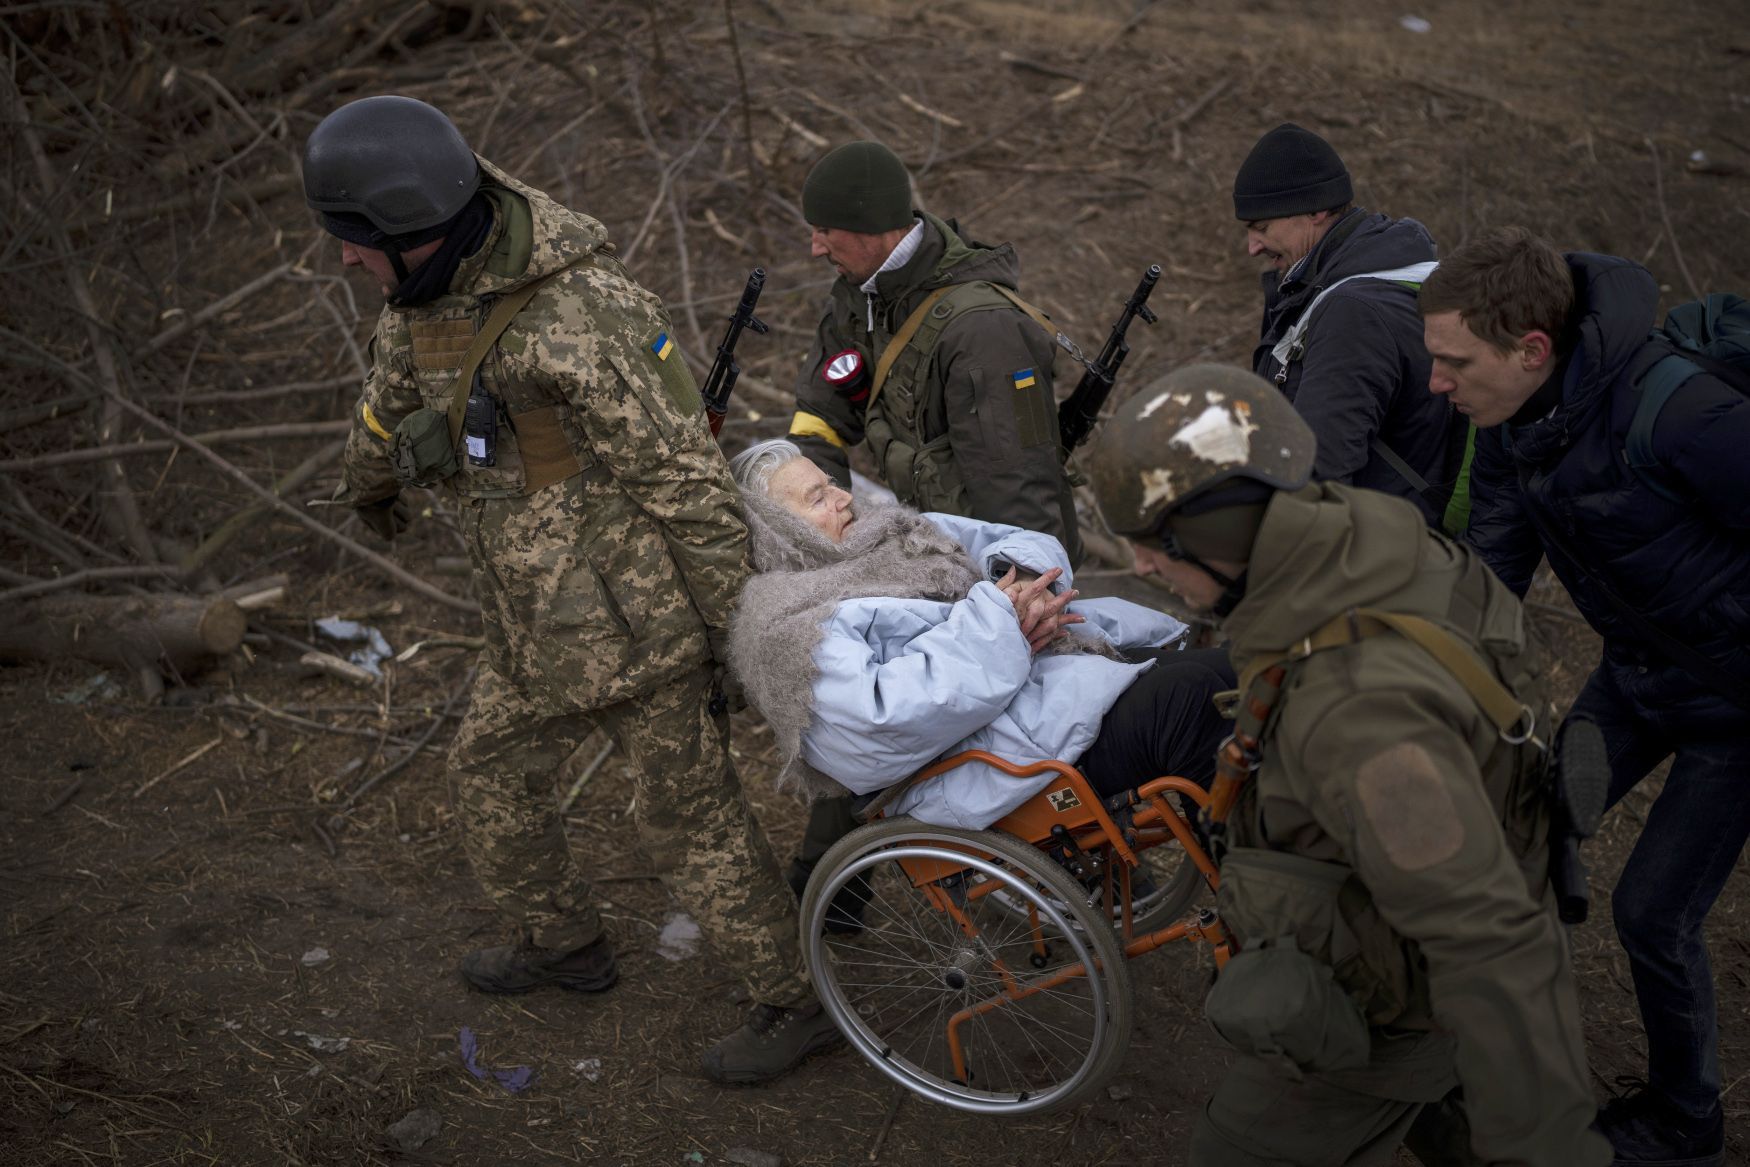 Foto / 7. 3. 2022 / Okolí Kyjeva / Evakuace civilistů / Ukrajina / Boje na Ukrajině / Ruský útok na Ukrajinu